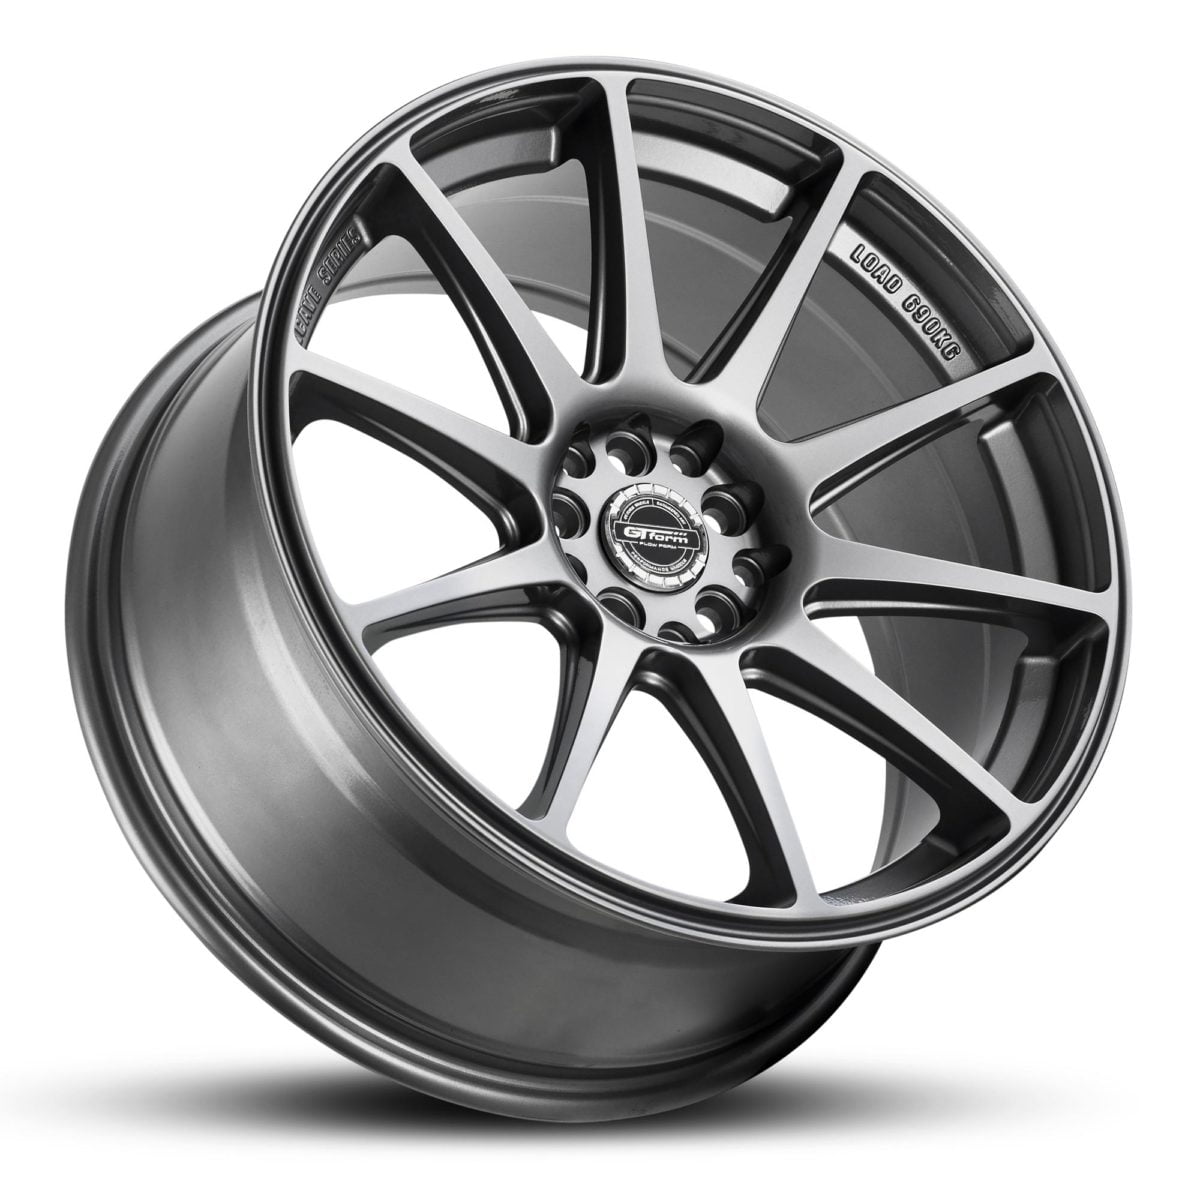 Performance wheels GT Form Podium gloss grey rims